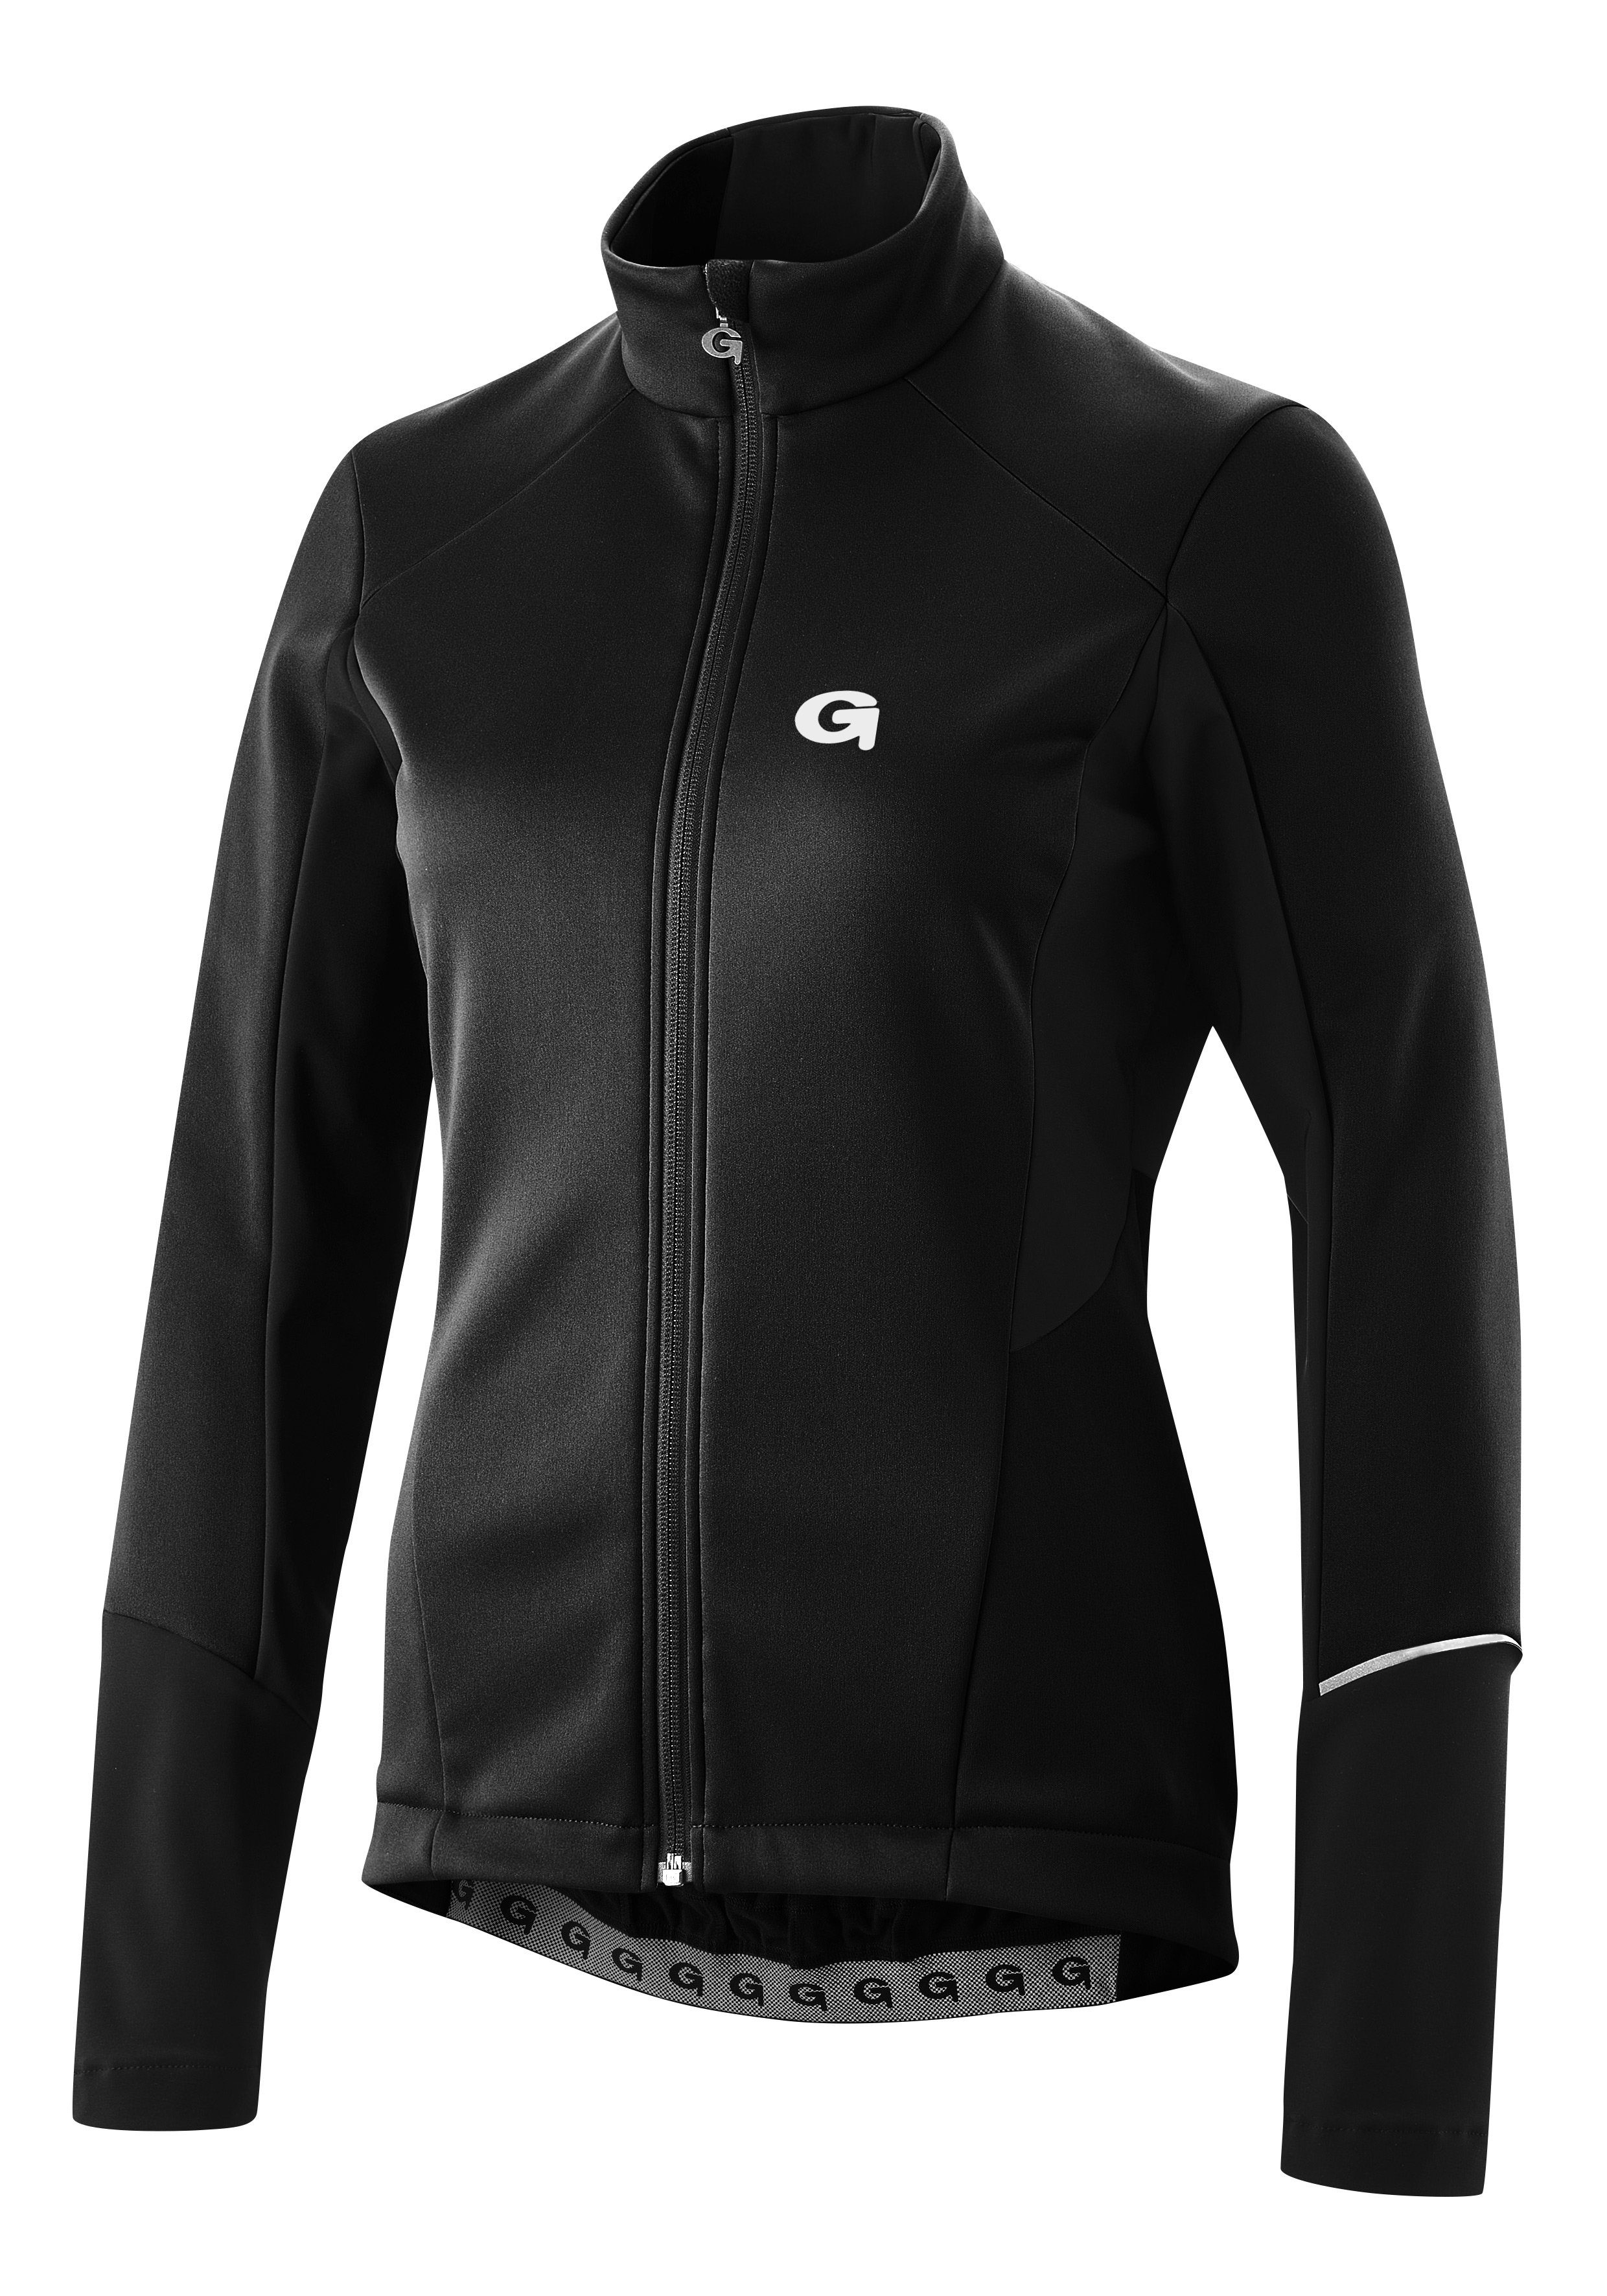 wasserabweisend schwarz Fahrradjacke Softshell-Jacke, FURIANI und Windjacke Gonso atmungsaktiv Damen